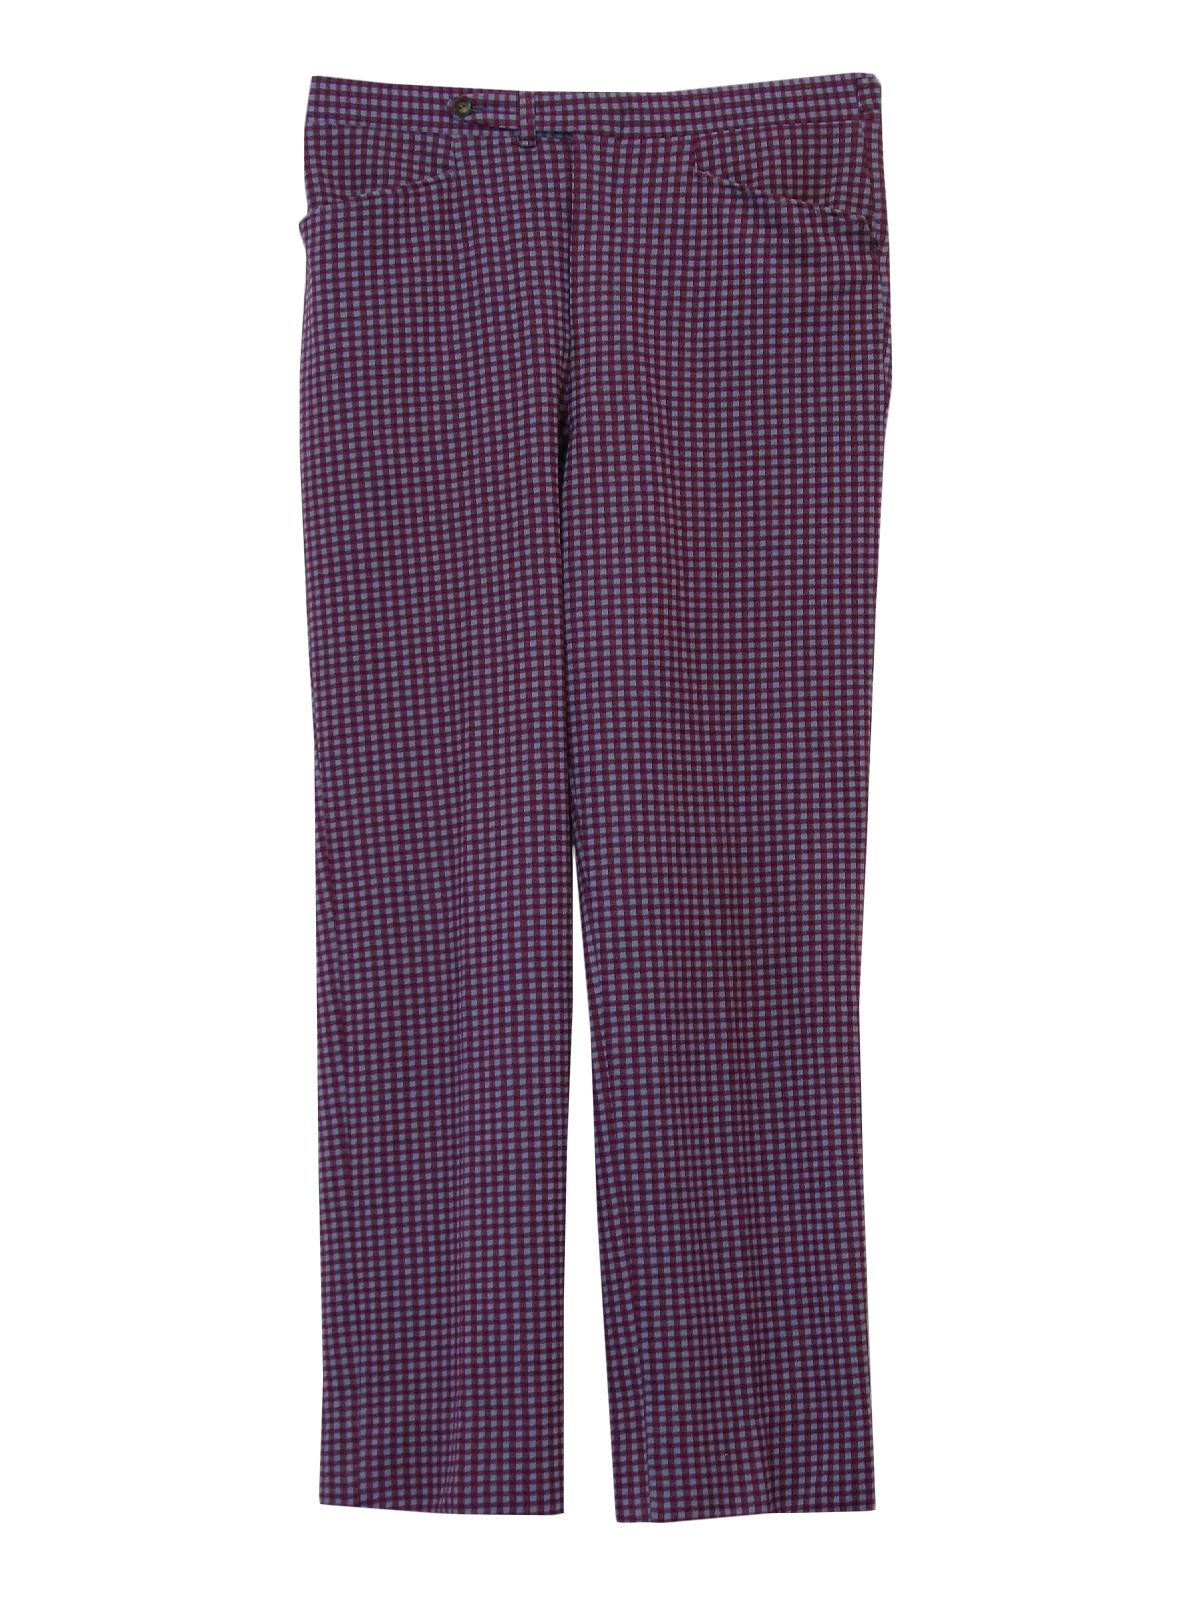 Missing Label 1960s Vintage Pants: 60s -Missing Label- Mens purple and ...